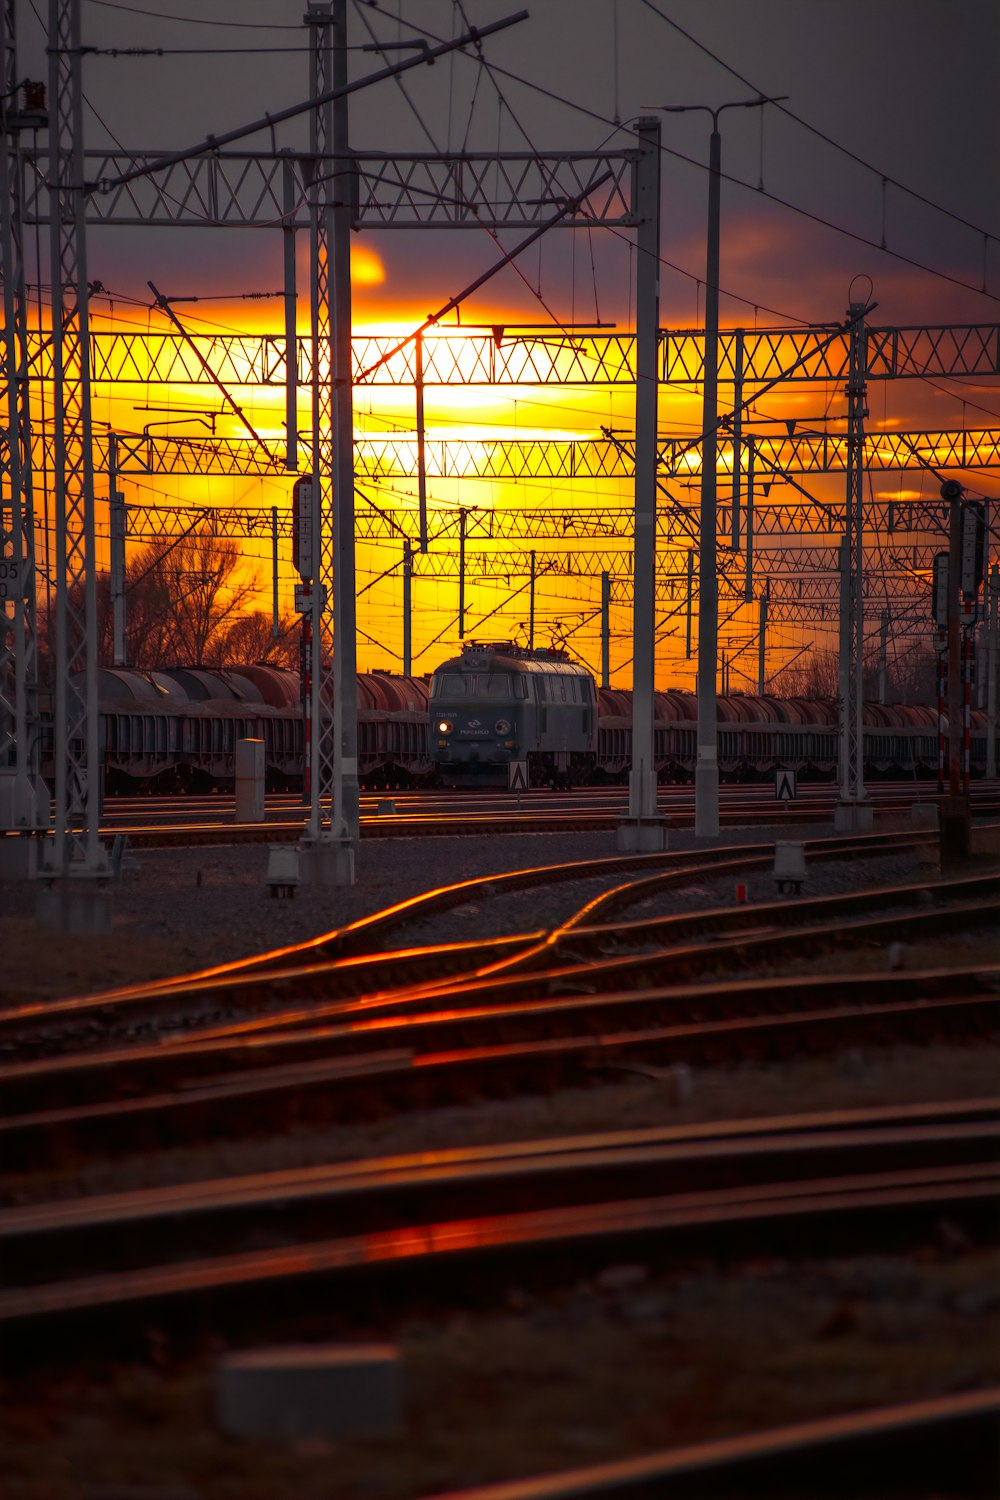 the sun is setting over a train yard